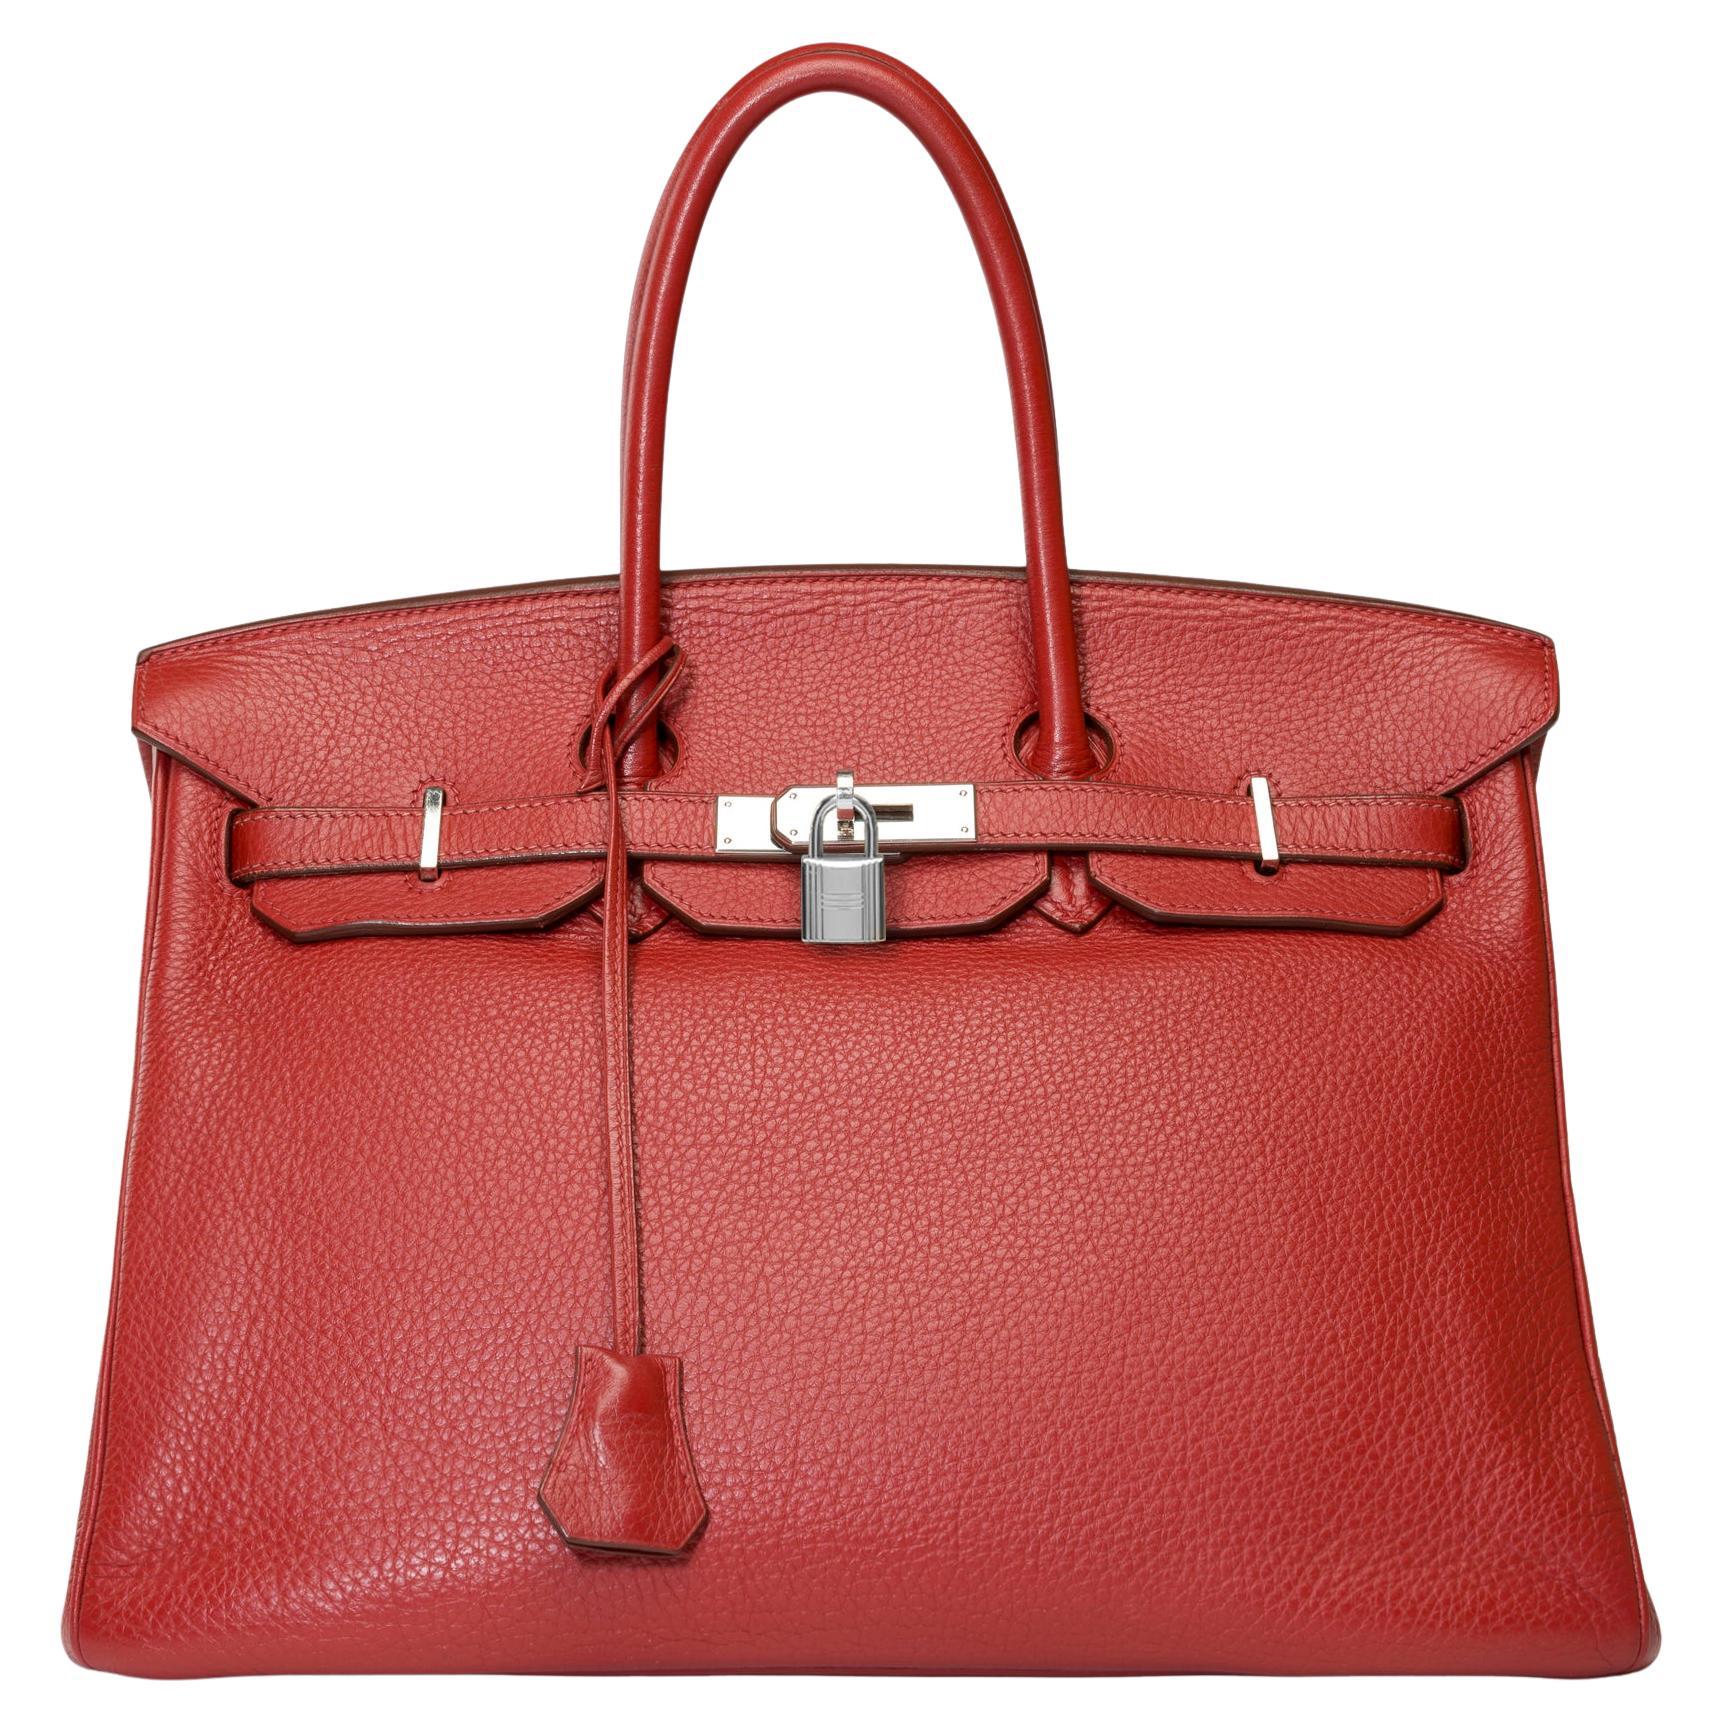 Stunning Hermès Birkin 35 handbag in Sienne Togo leather, SHW For Sale